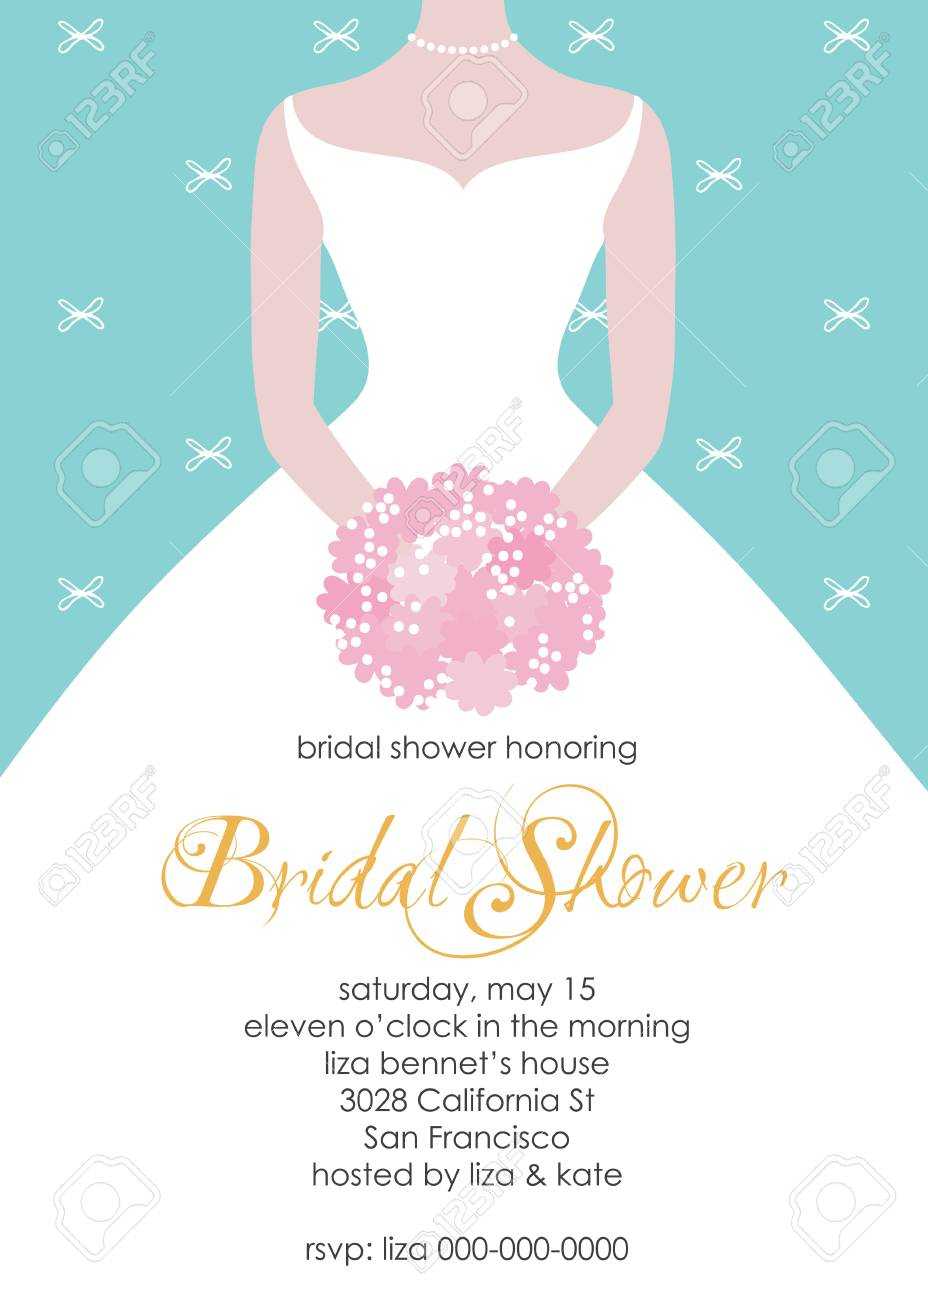 Bridal Shower Invitation Template. Wedding Fashion Vector Illustrartion Intended For Blank Bridal Shower Invitations Templates